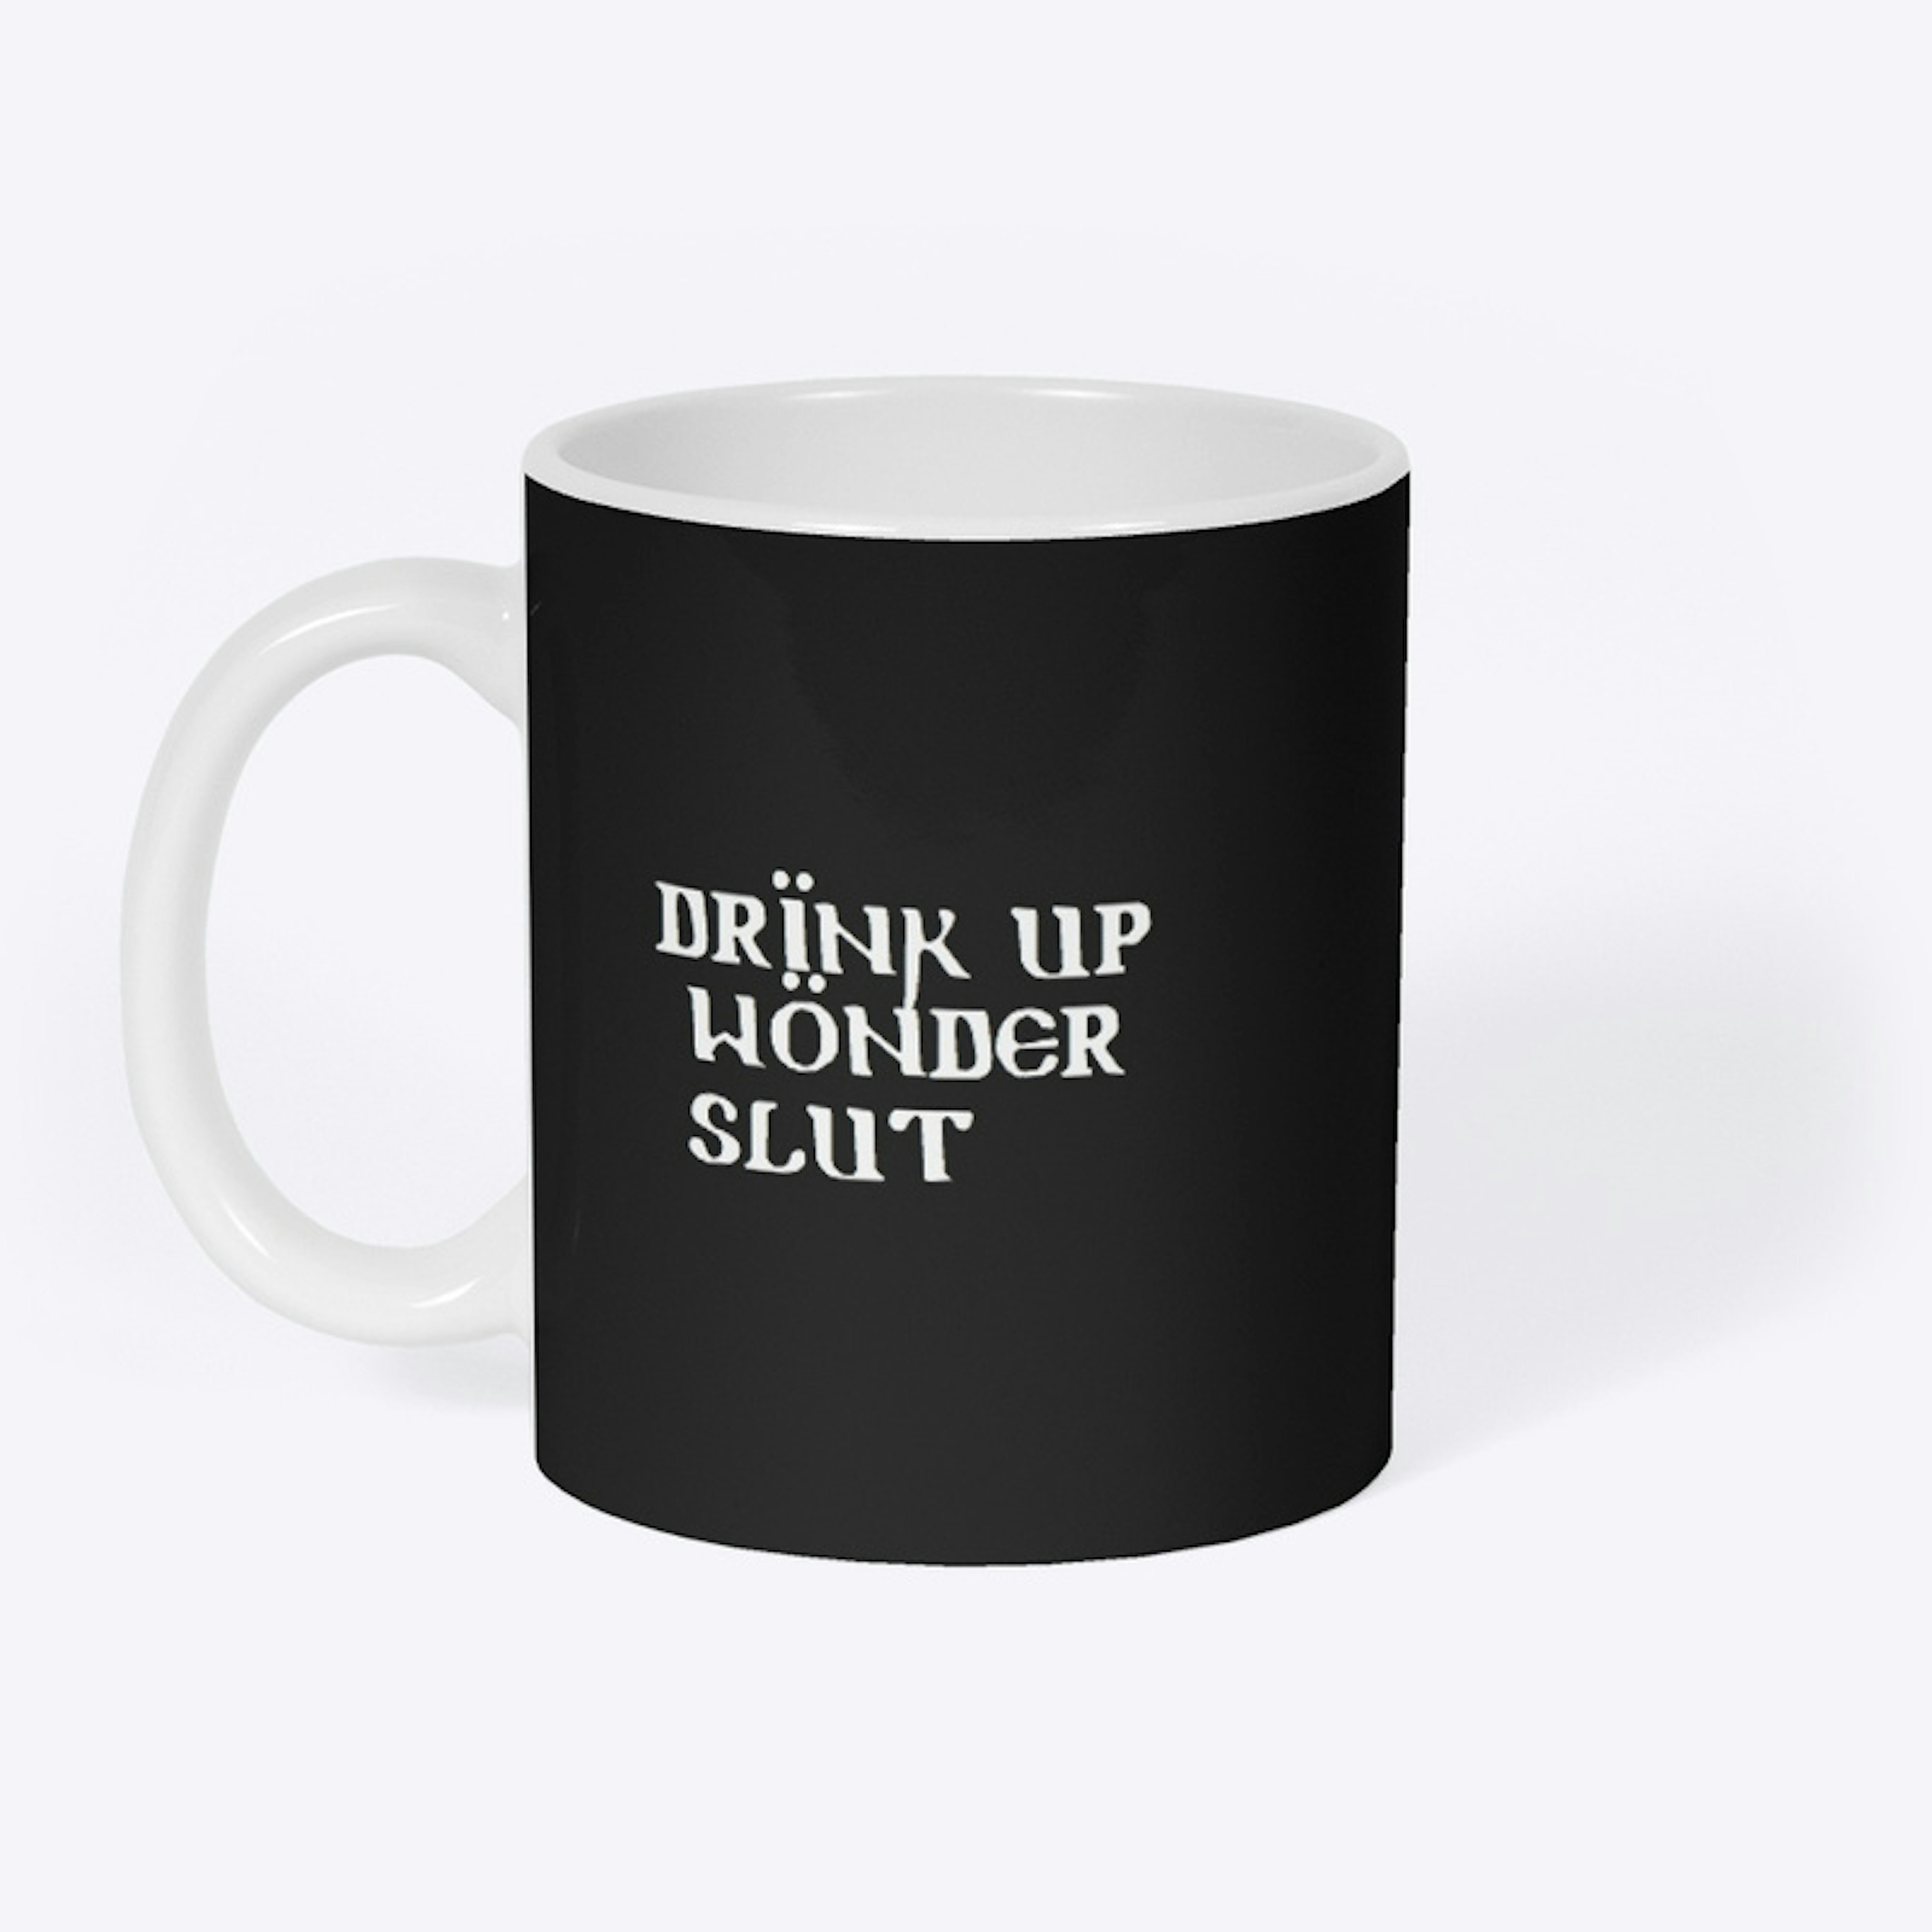 Drink Up Wonder Sluts!